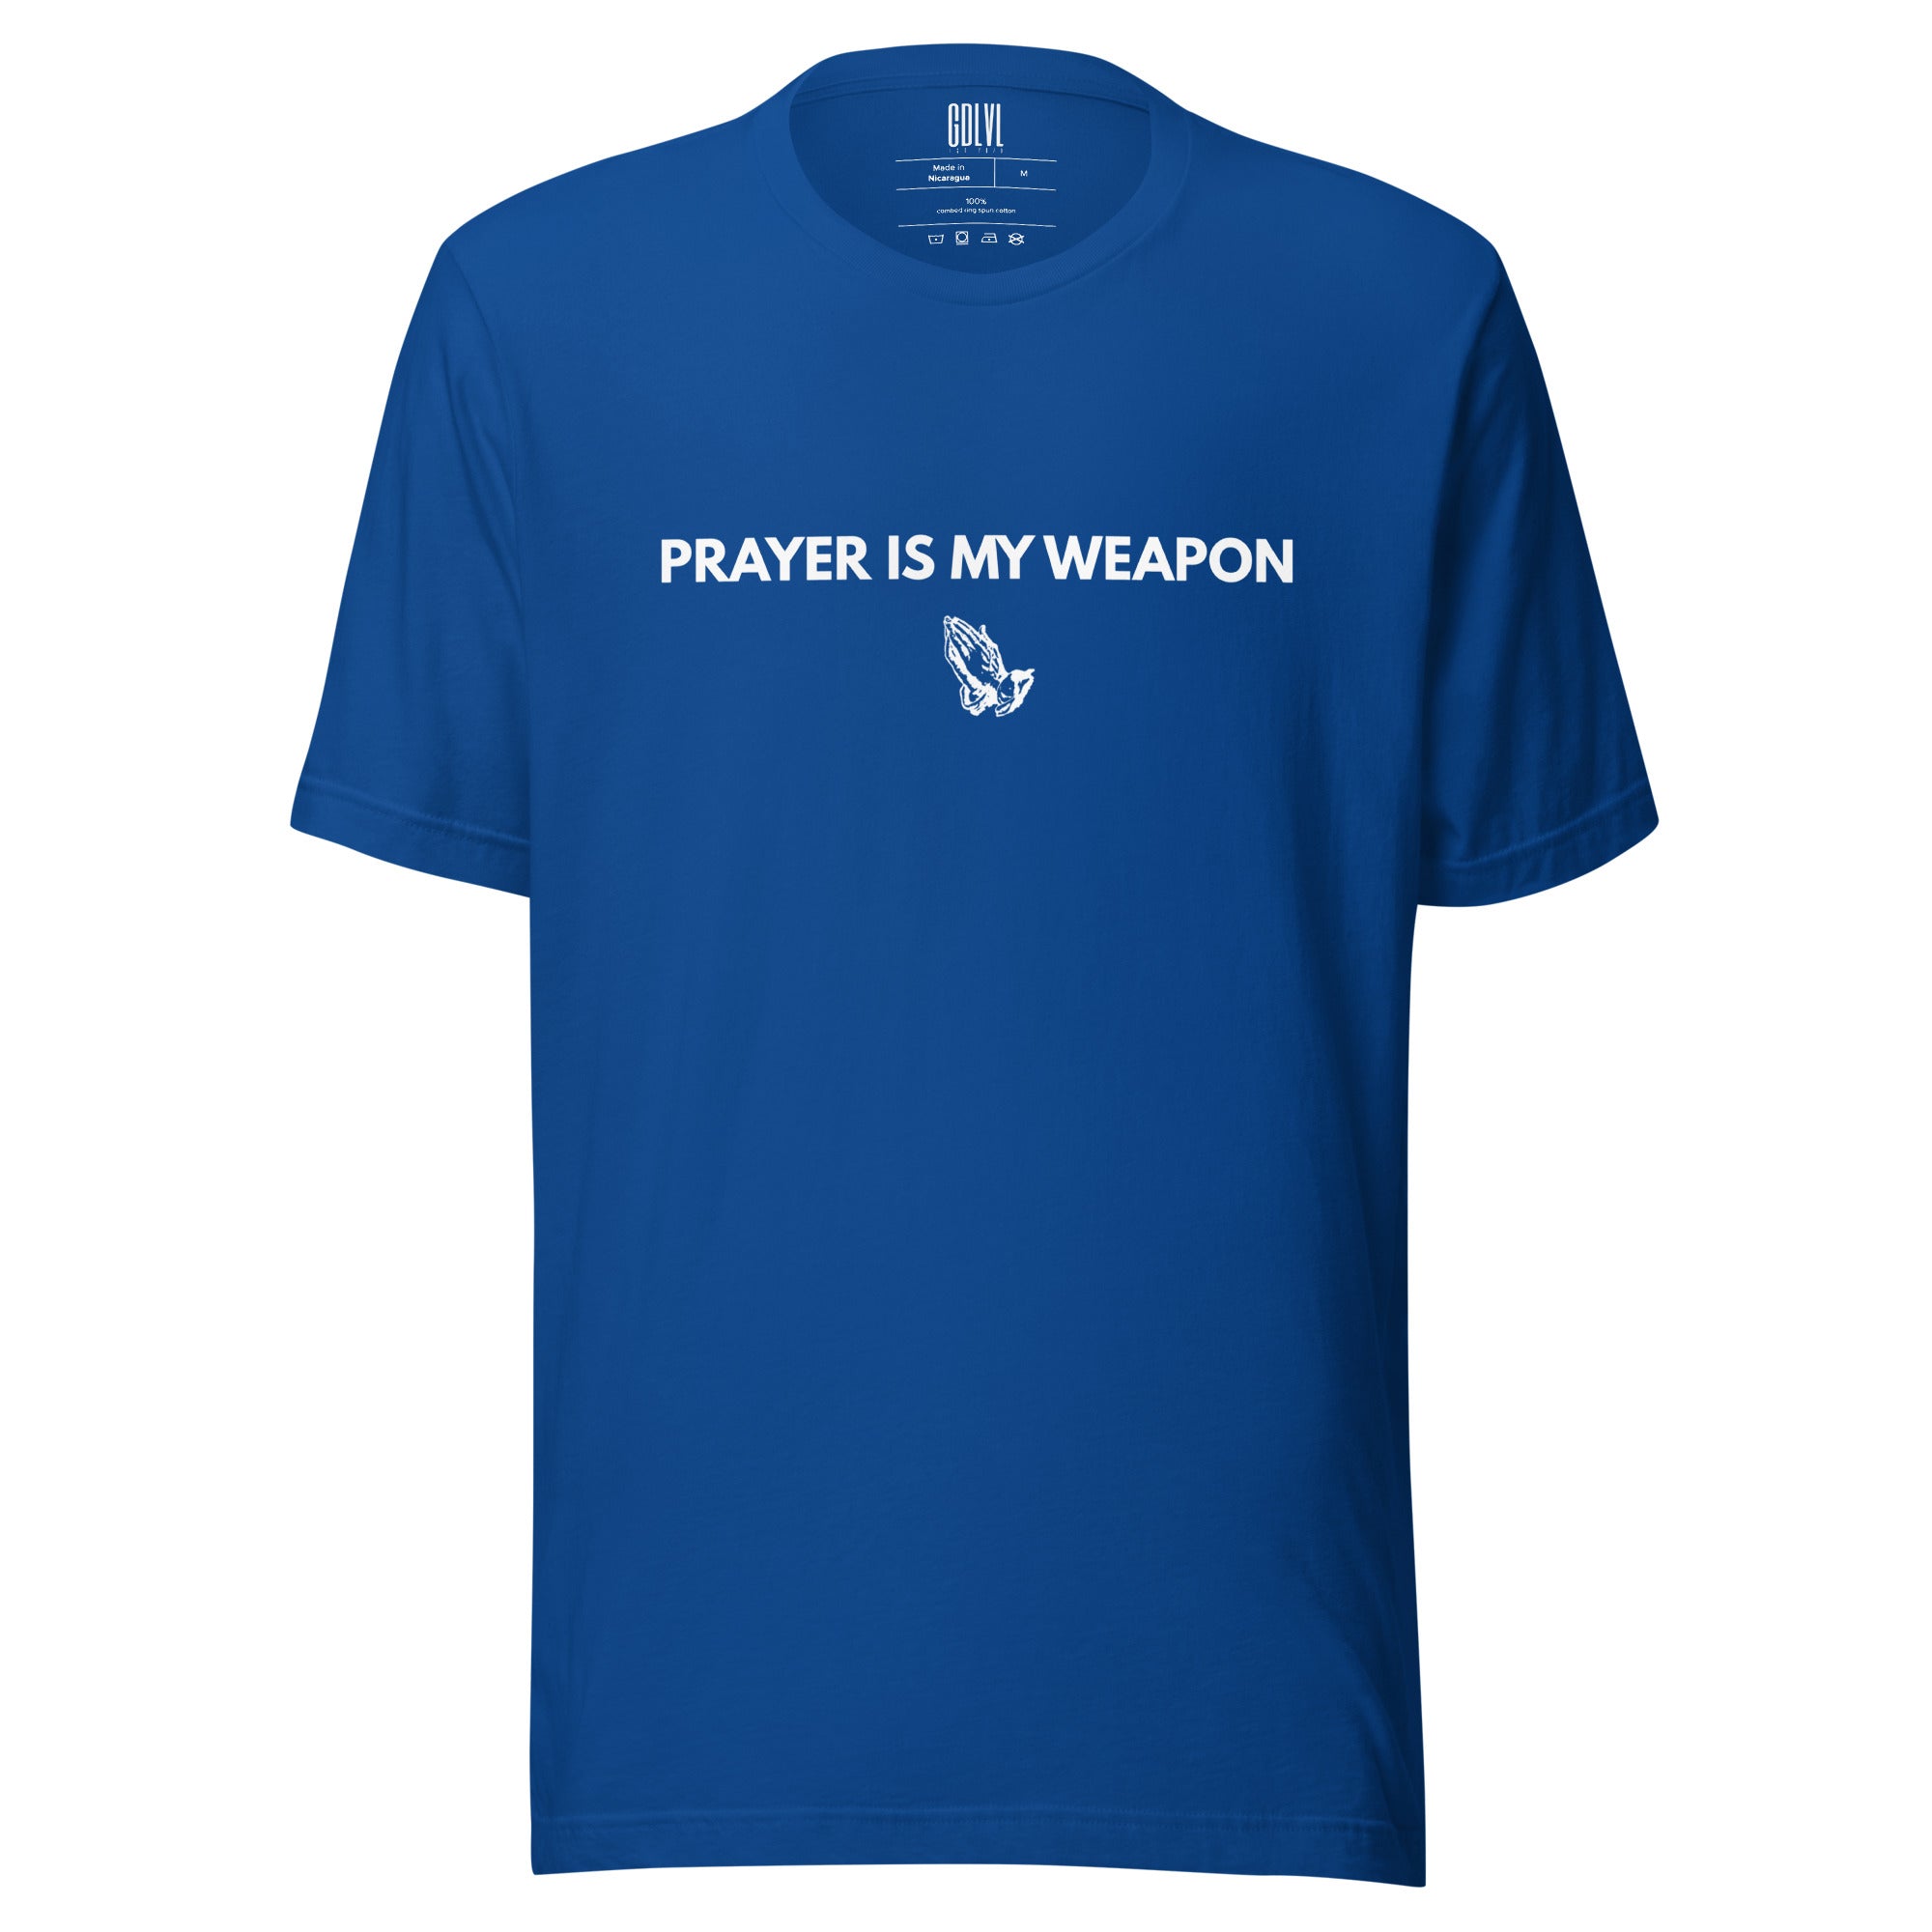 PRAYER IS MY WEAPON t-shirt